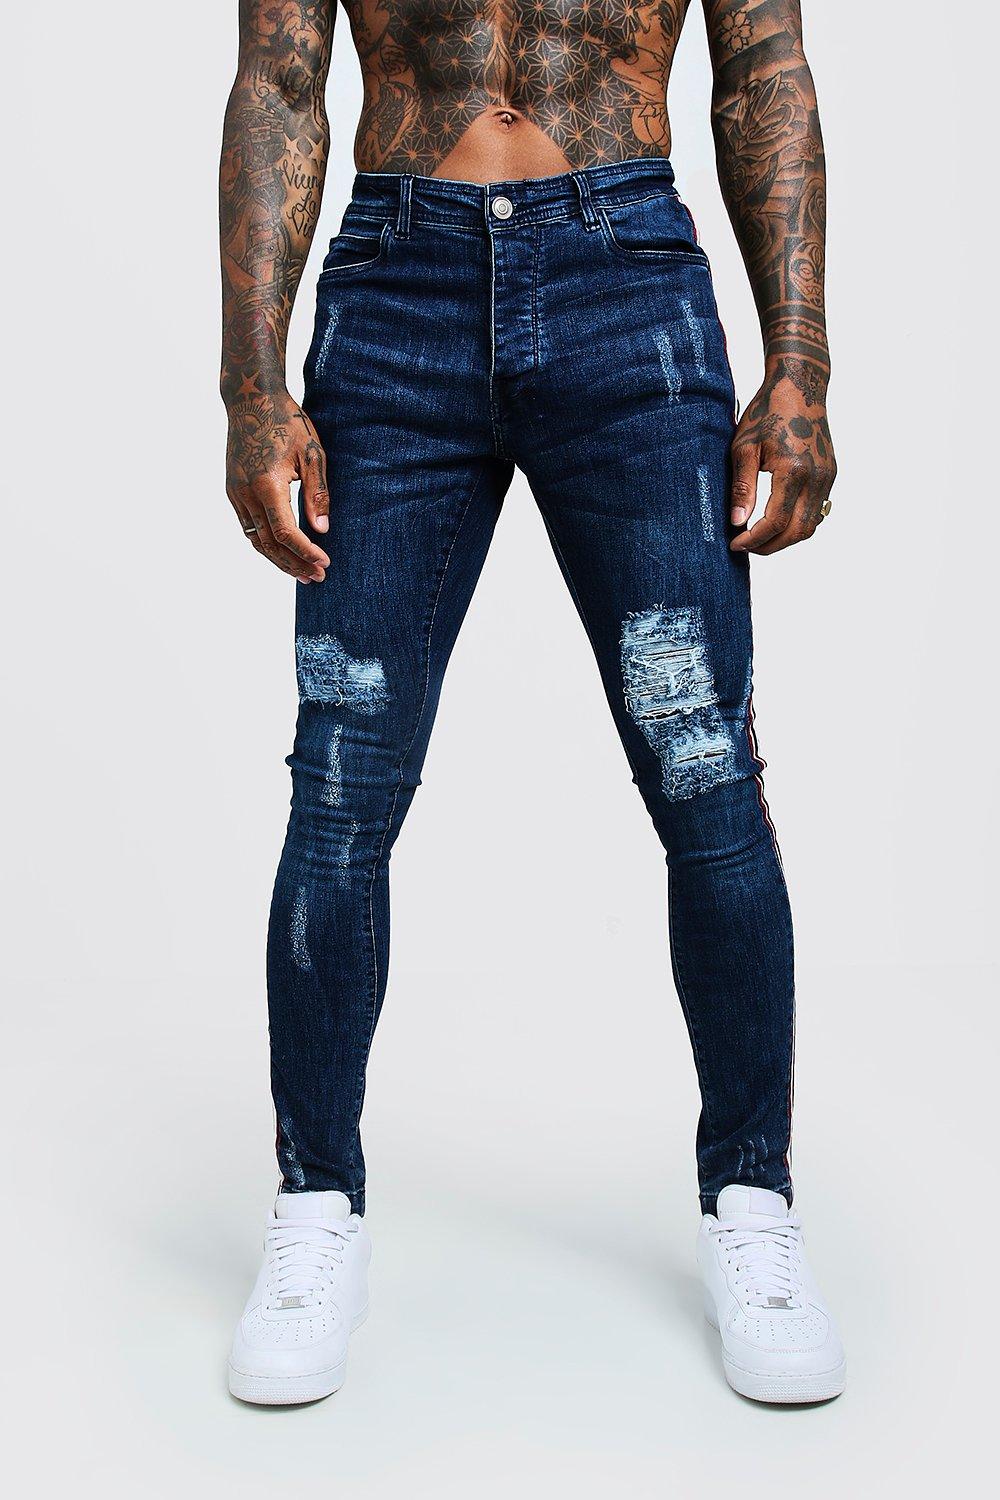 dark blue distressed jeans